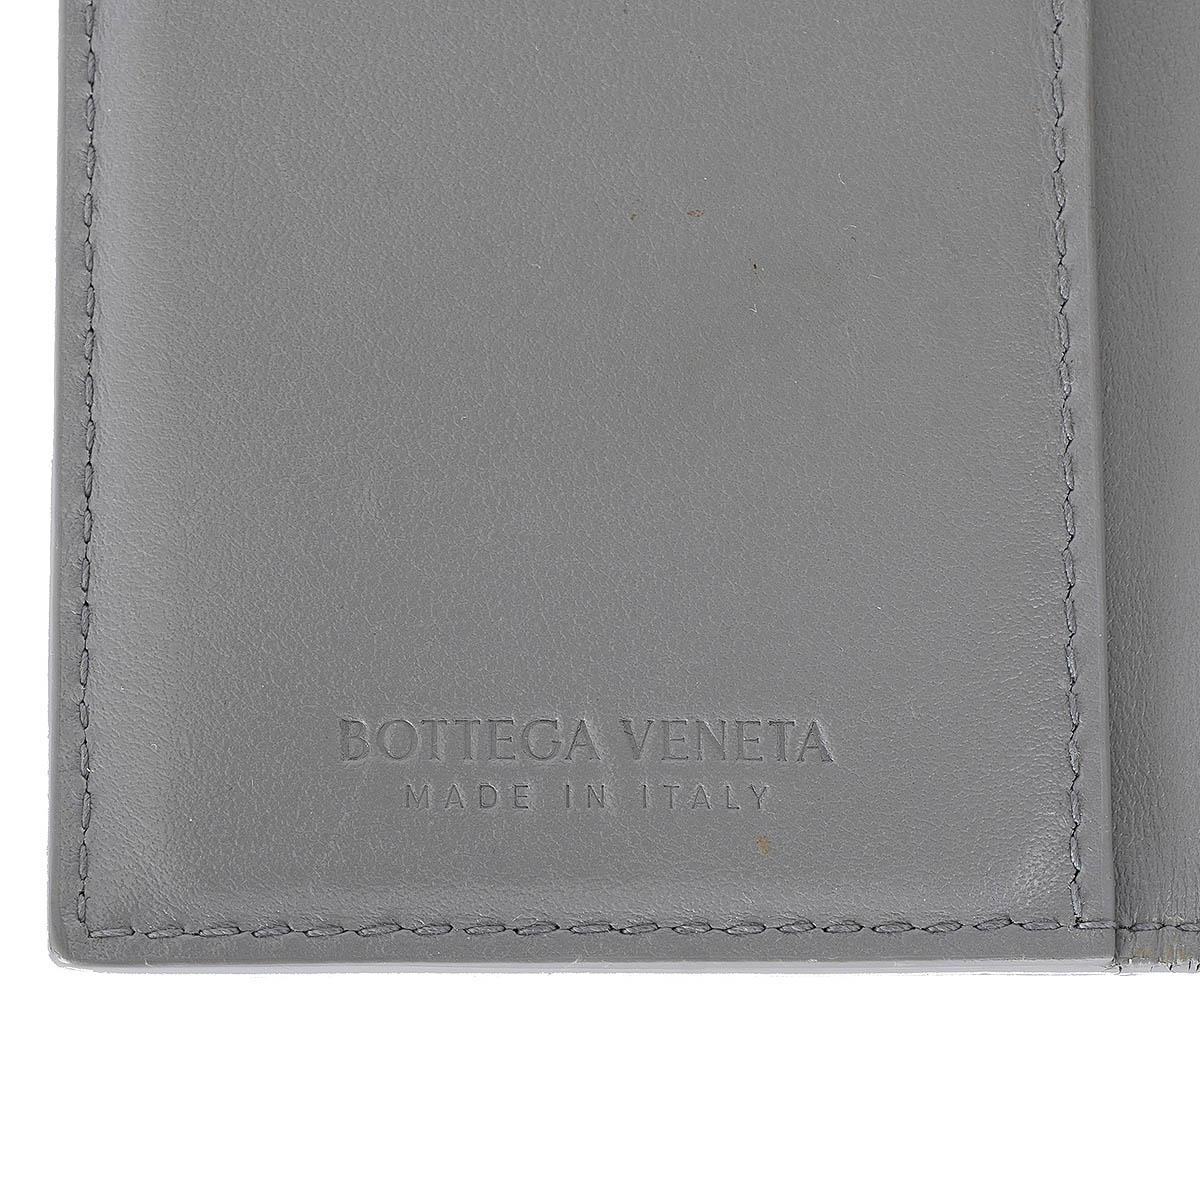 BOTTEGA VENETA grey leather INTRECCIATO KEY & CARD Wallet For Sale 1